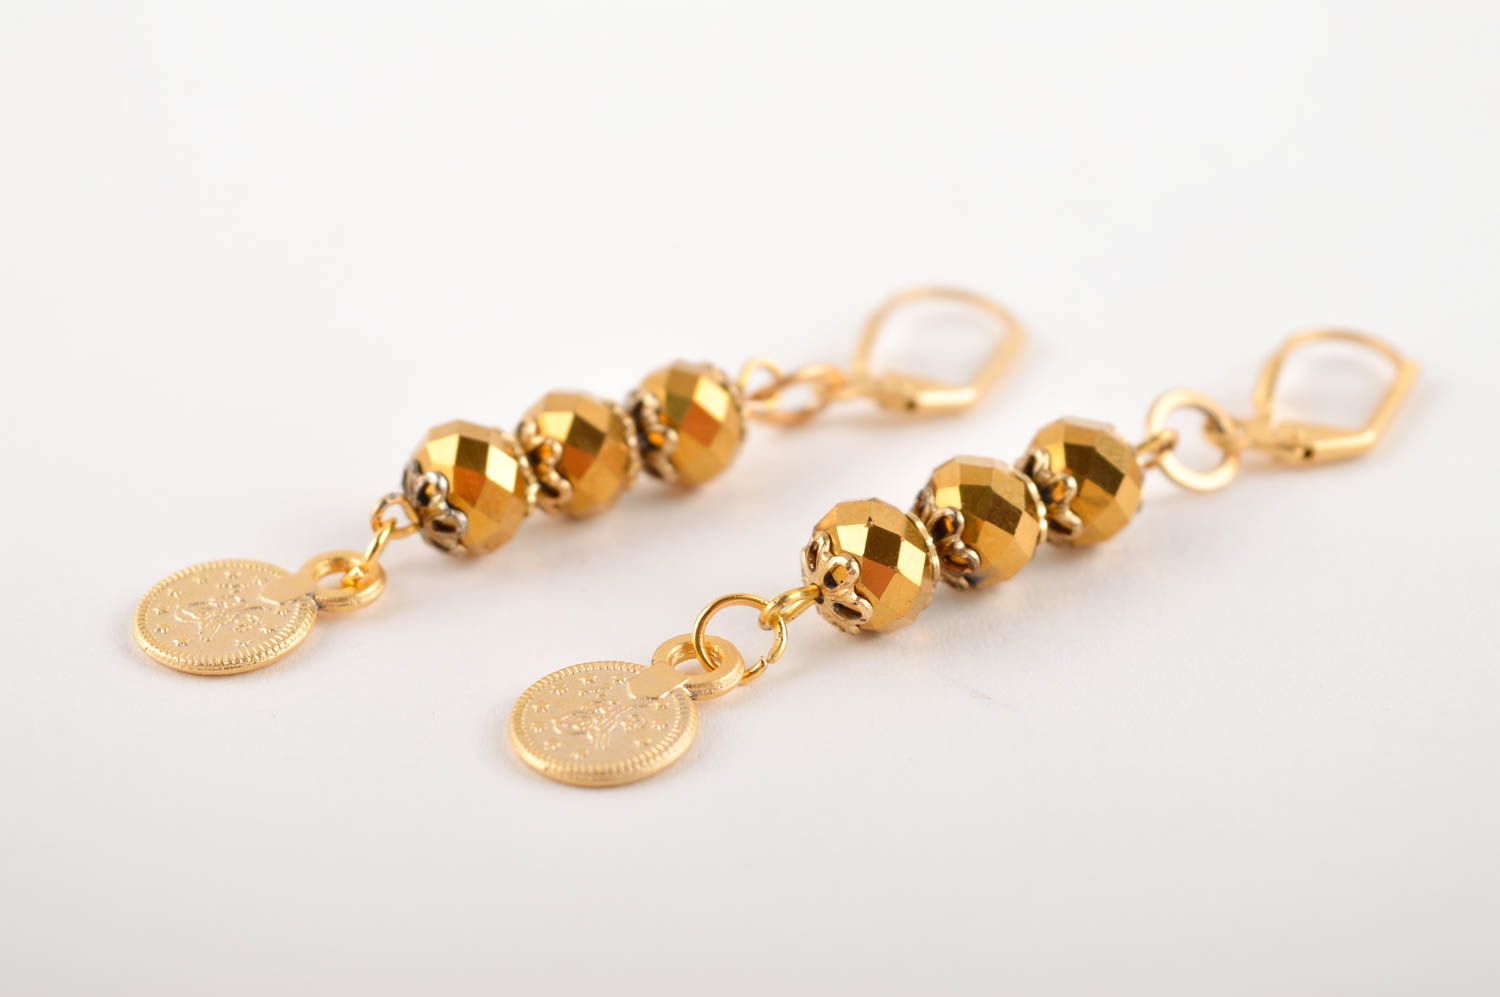 Handmade stylish earrings with beads long earrings with charms fashion jewelry photo 4